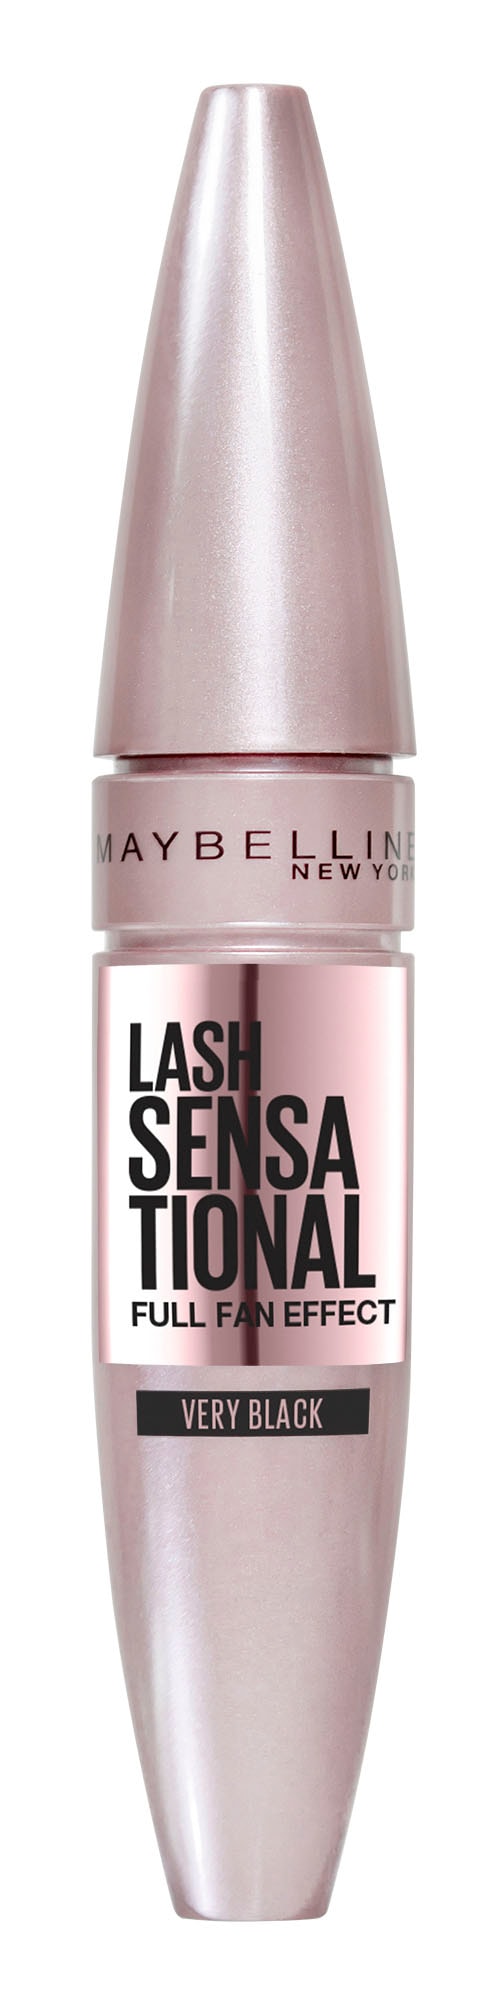 MAYBELLINE NEW YORK Mascara »Maybelline New York Lash Sensational Mascara«